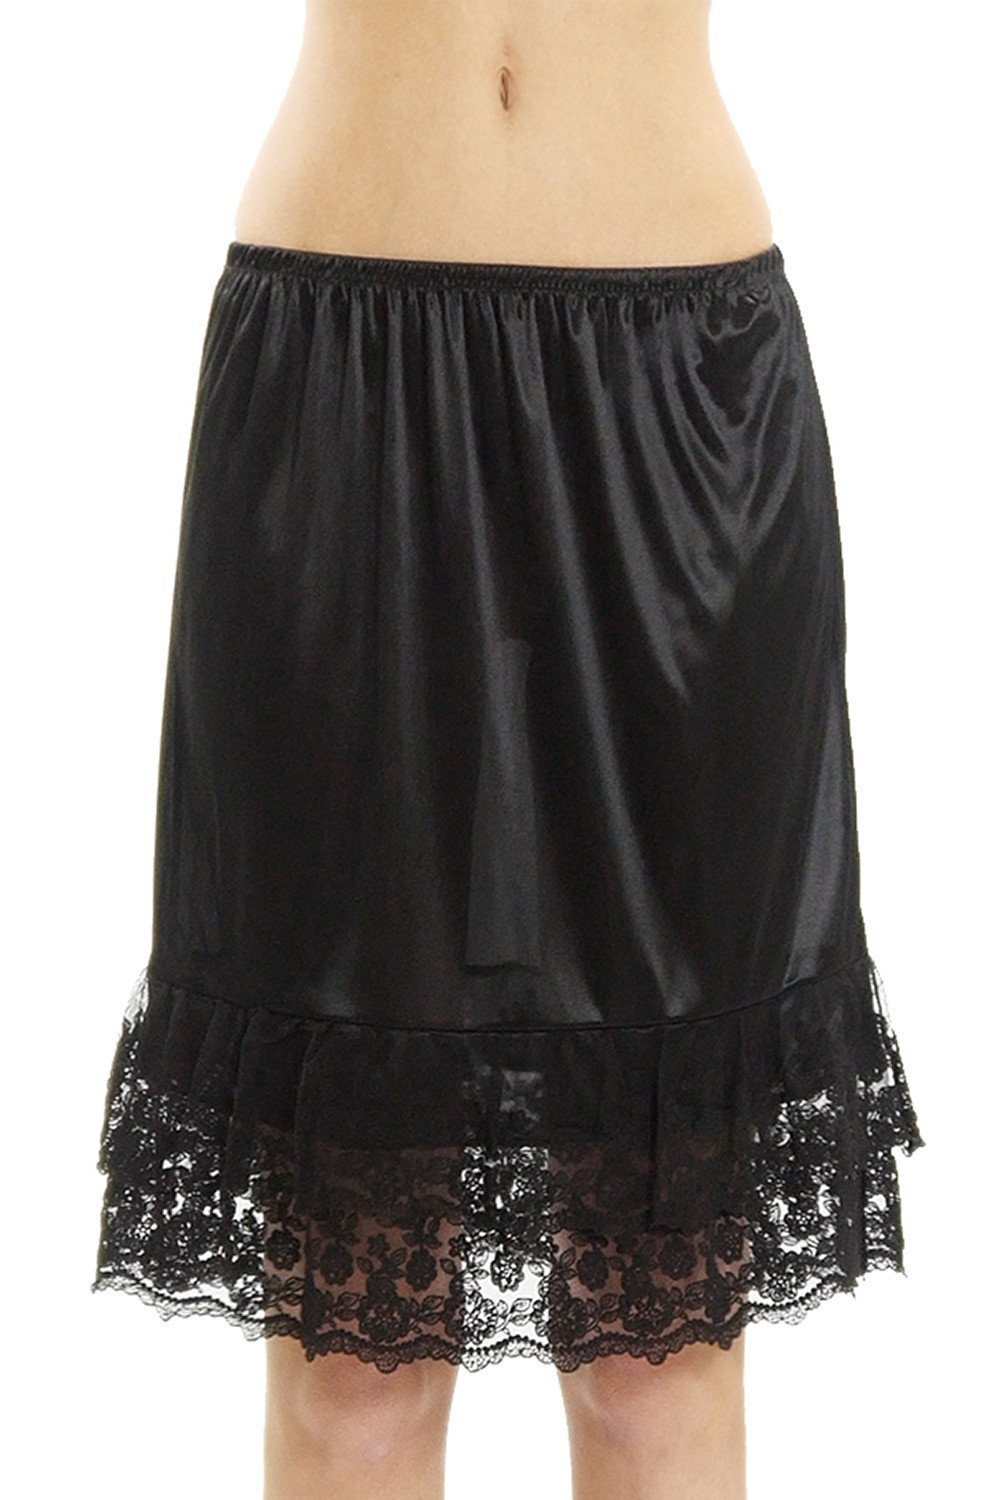 Melody double lace satin half slip skirt extender - 21 length